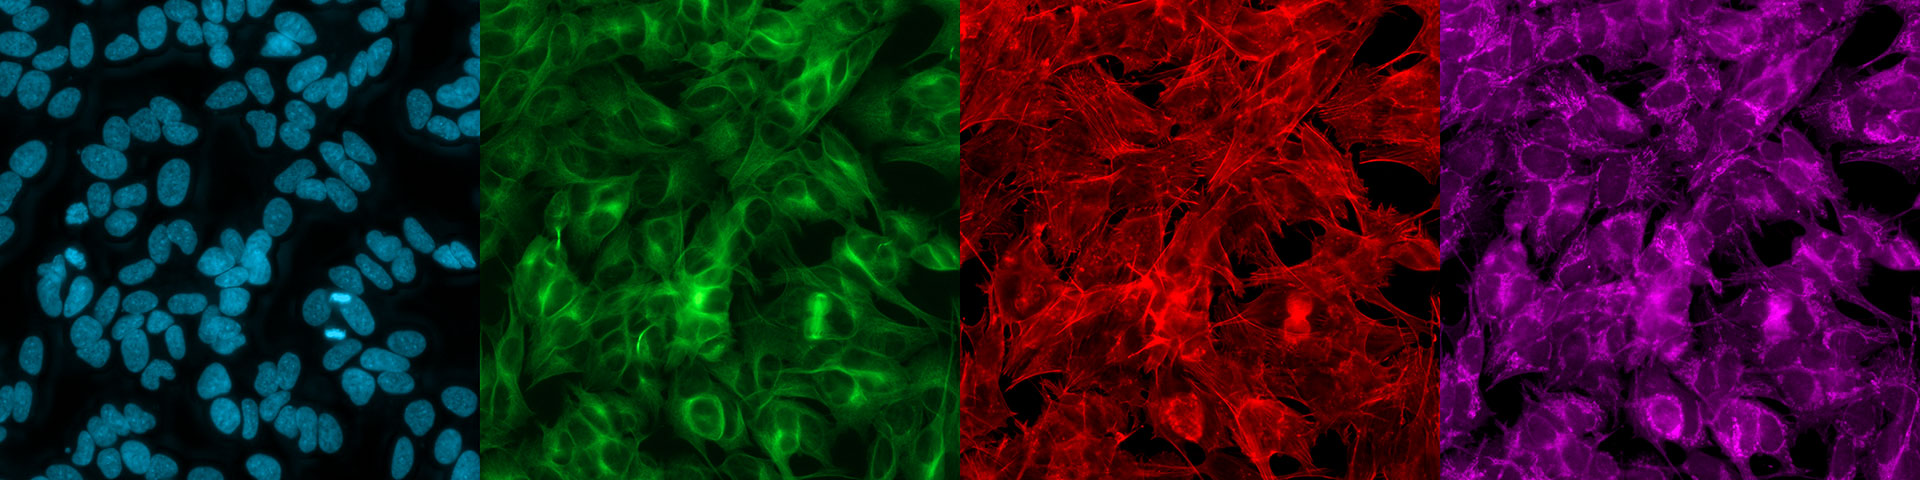 Hoechst–Chromatin（蓝色），anti-alpha-tubulin FITC抗体标记的α-Tubulin（绿色）、鬼笔环肽标记的肌动蛋白（红色），MitoTracker Deep Red标记的线粒体（紫色）。 